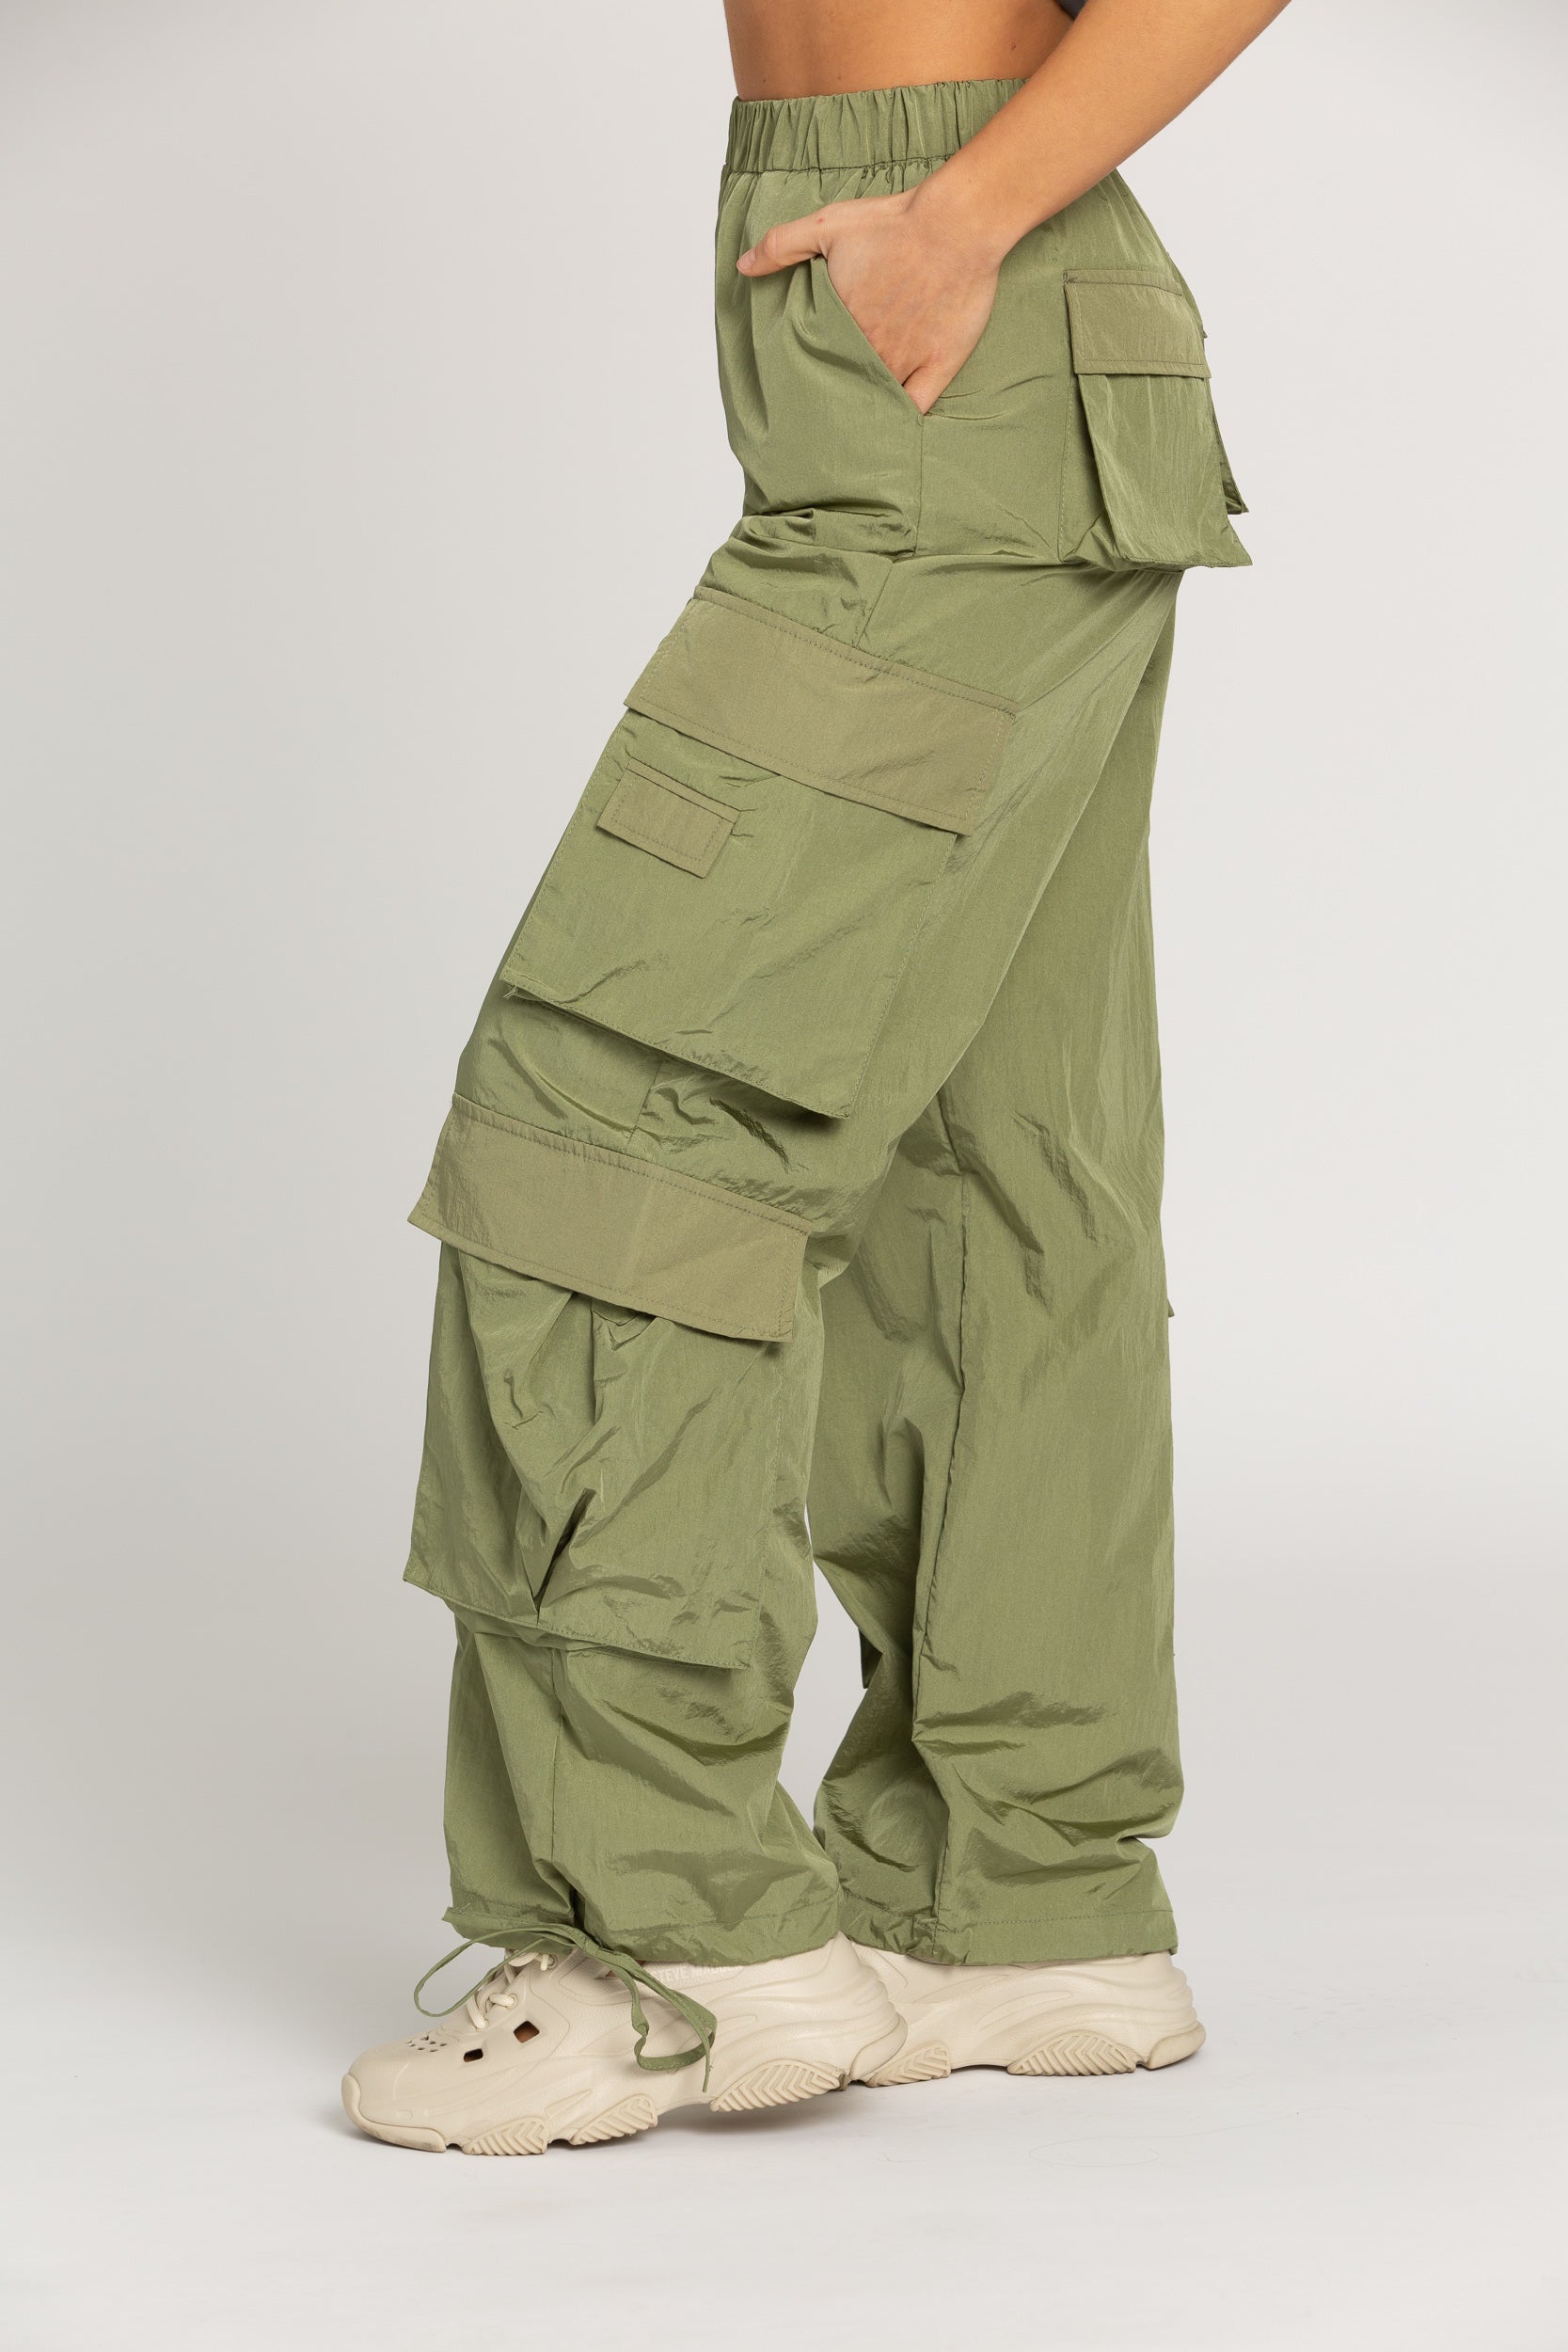 Shiny Olive Green Parachute Pants